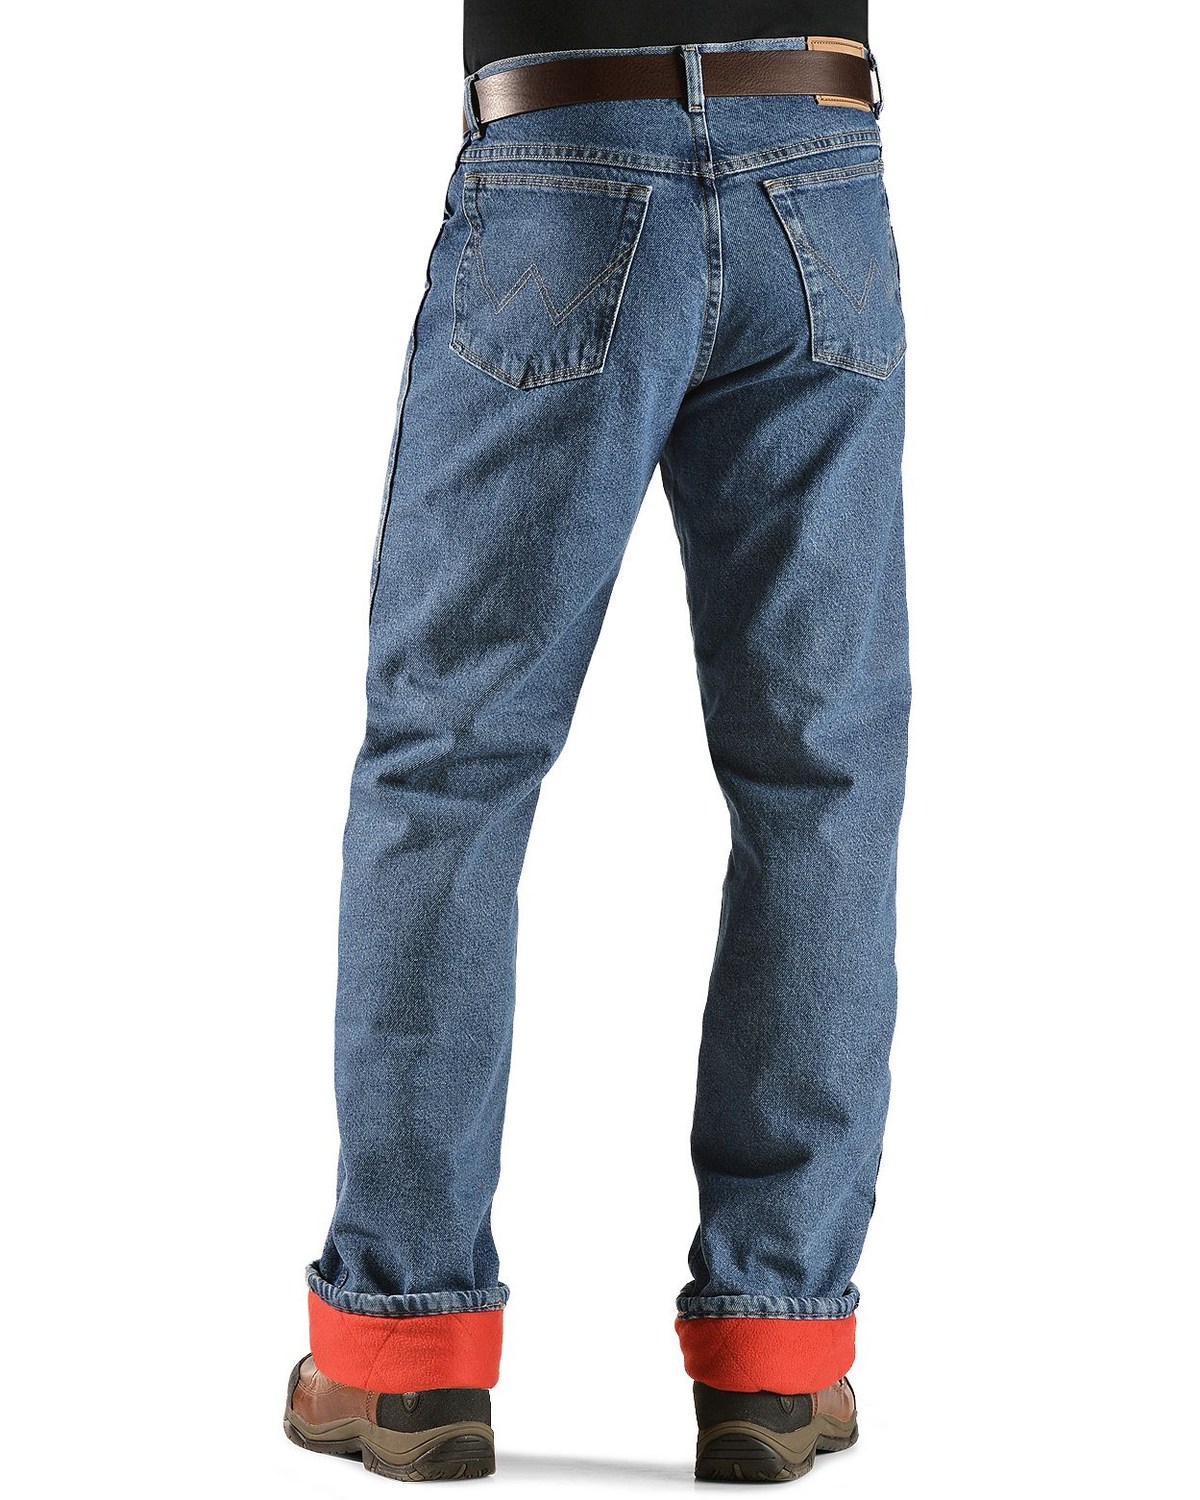 wrangler insulated jeans mens